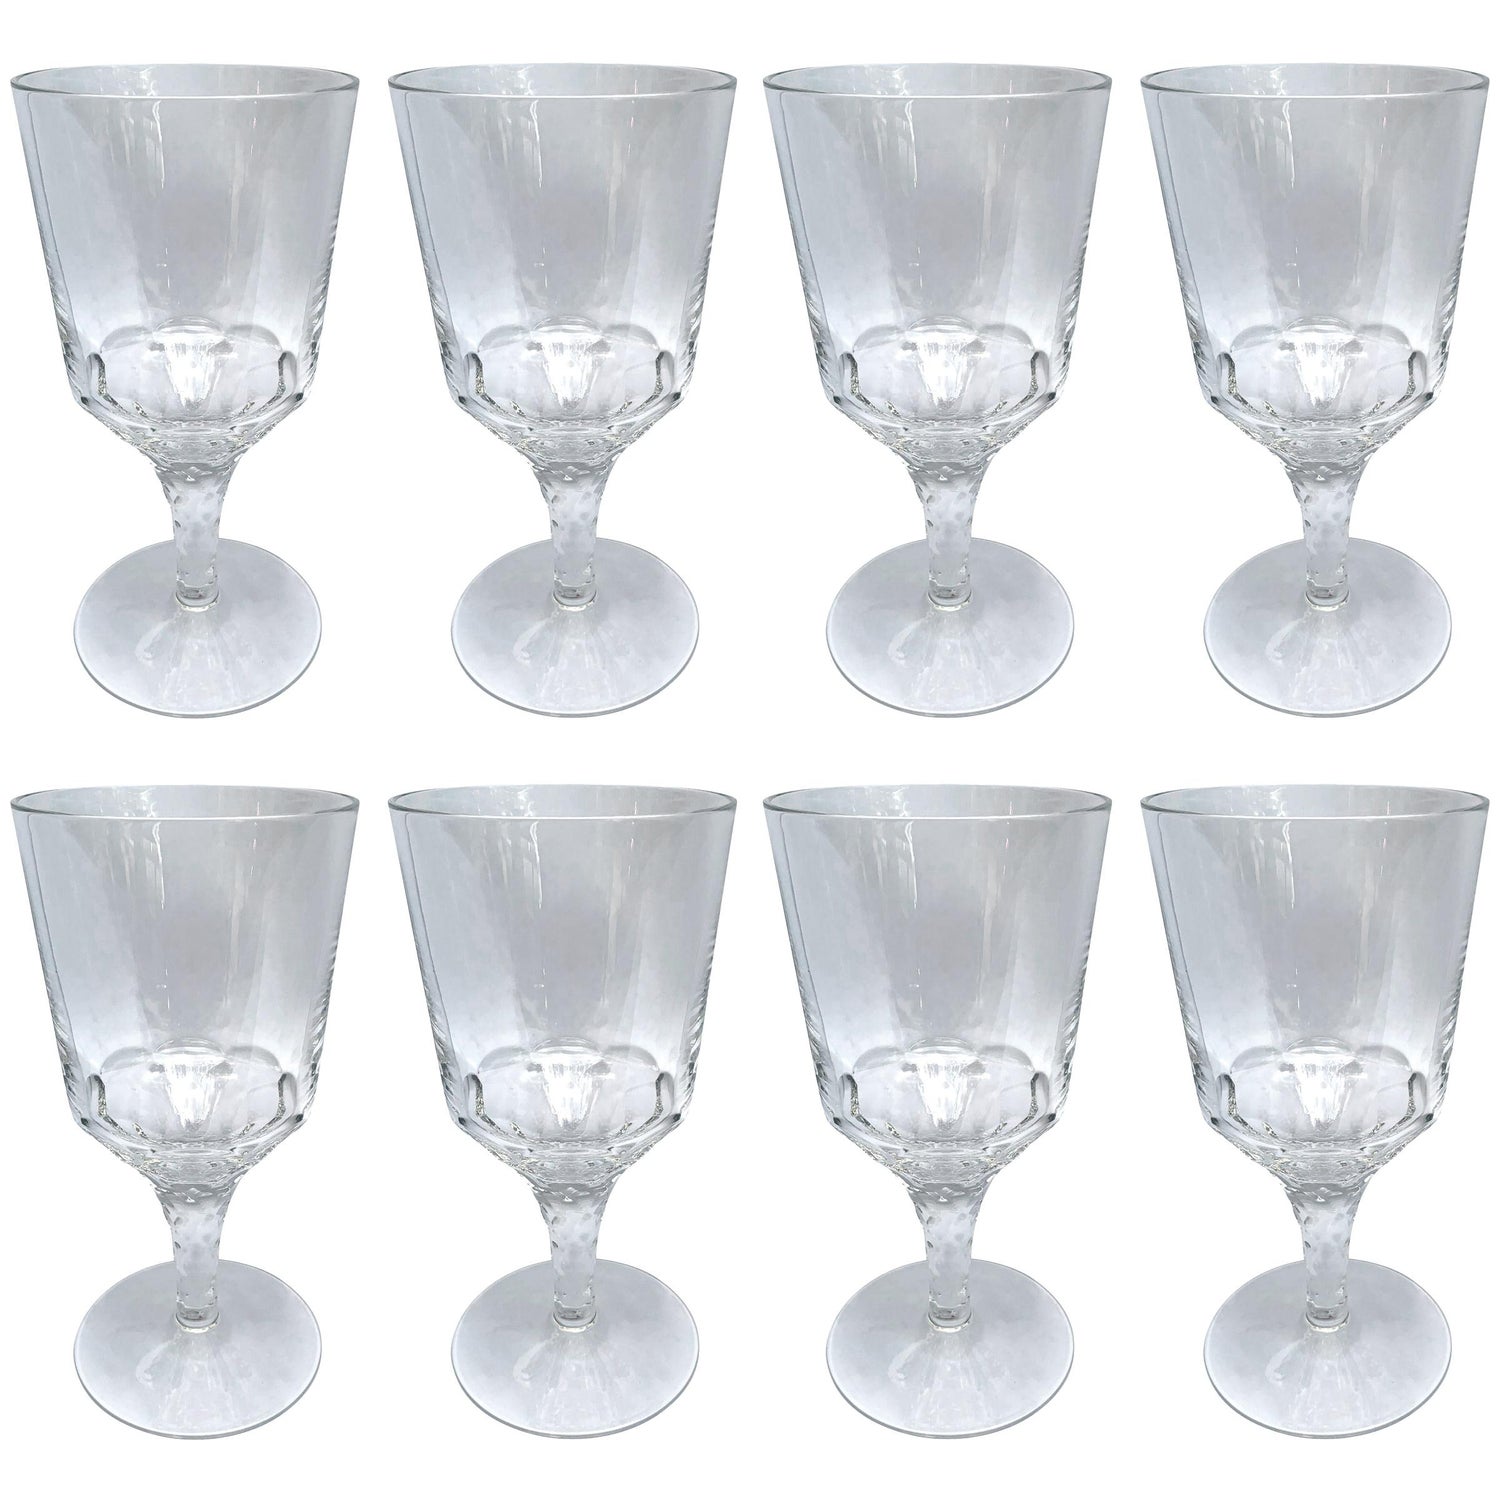 https://a.1stdibscdn.com/set-of-eight-hand-blown-crystal-wine-glasses-for-sale/1121189/f_150768511560498920812/15076851_master.jpg?width=1500